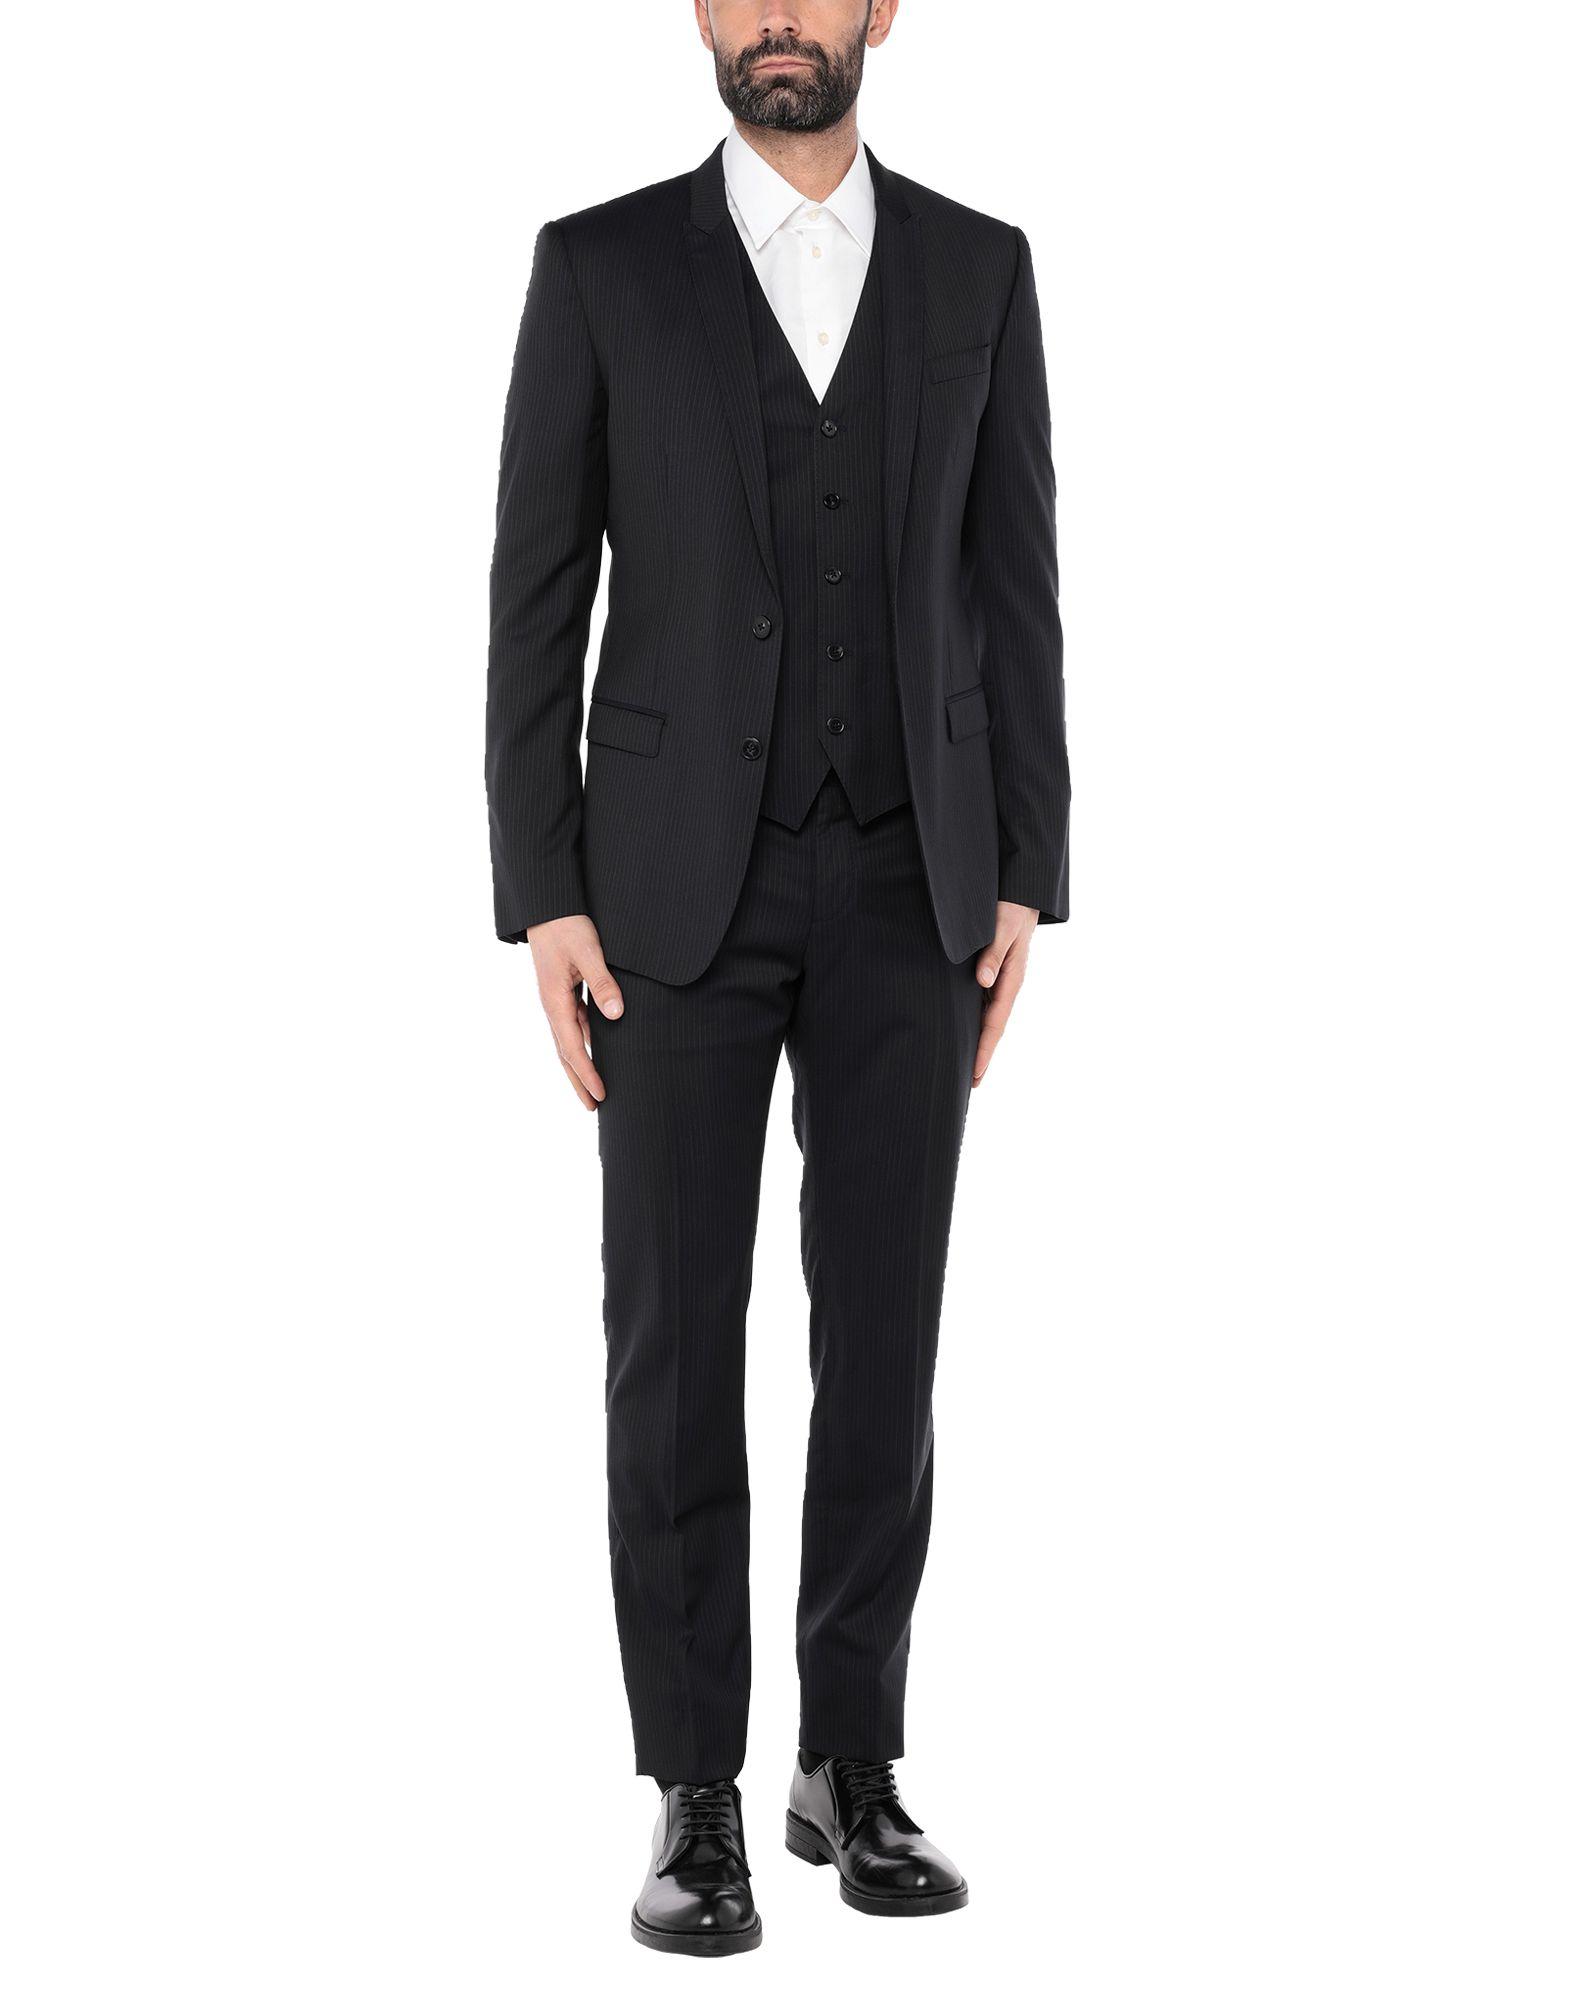 Dolce & Gabbana Suit in Dark Blue (Black) for Men - Lyst